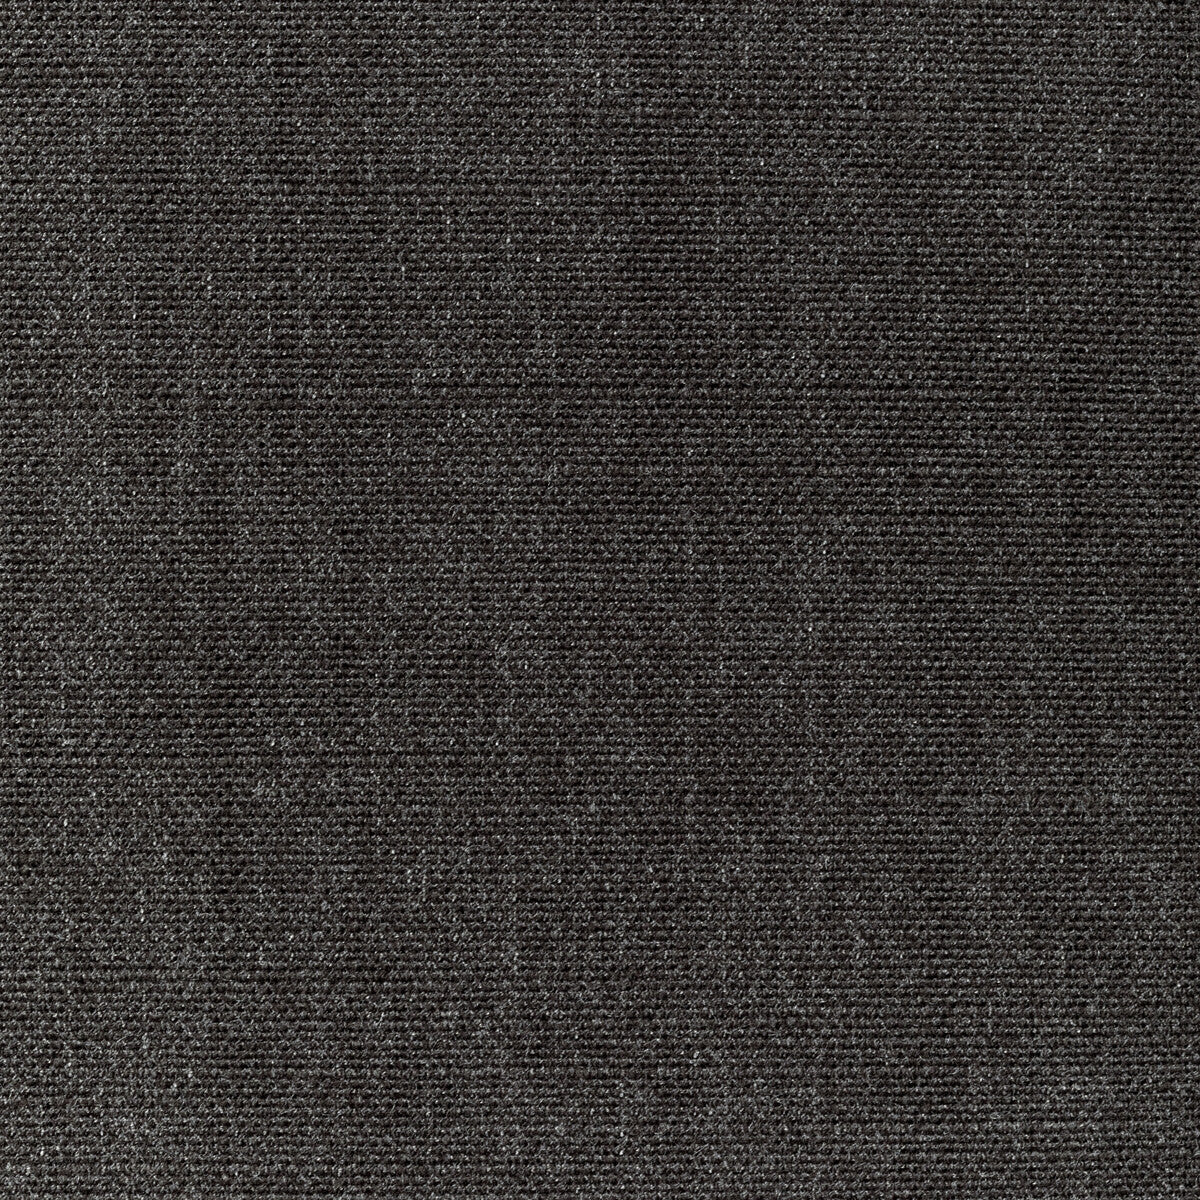 Kravet Smart fabric in 36112-8 color - pattern 36112.8.0 - by Kravet Smart in the Performance Kravetarmor collection